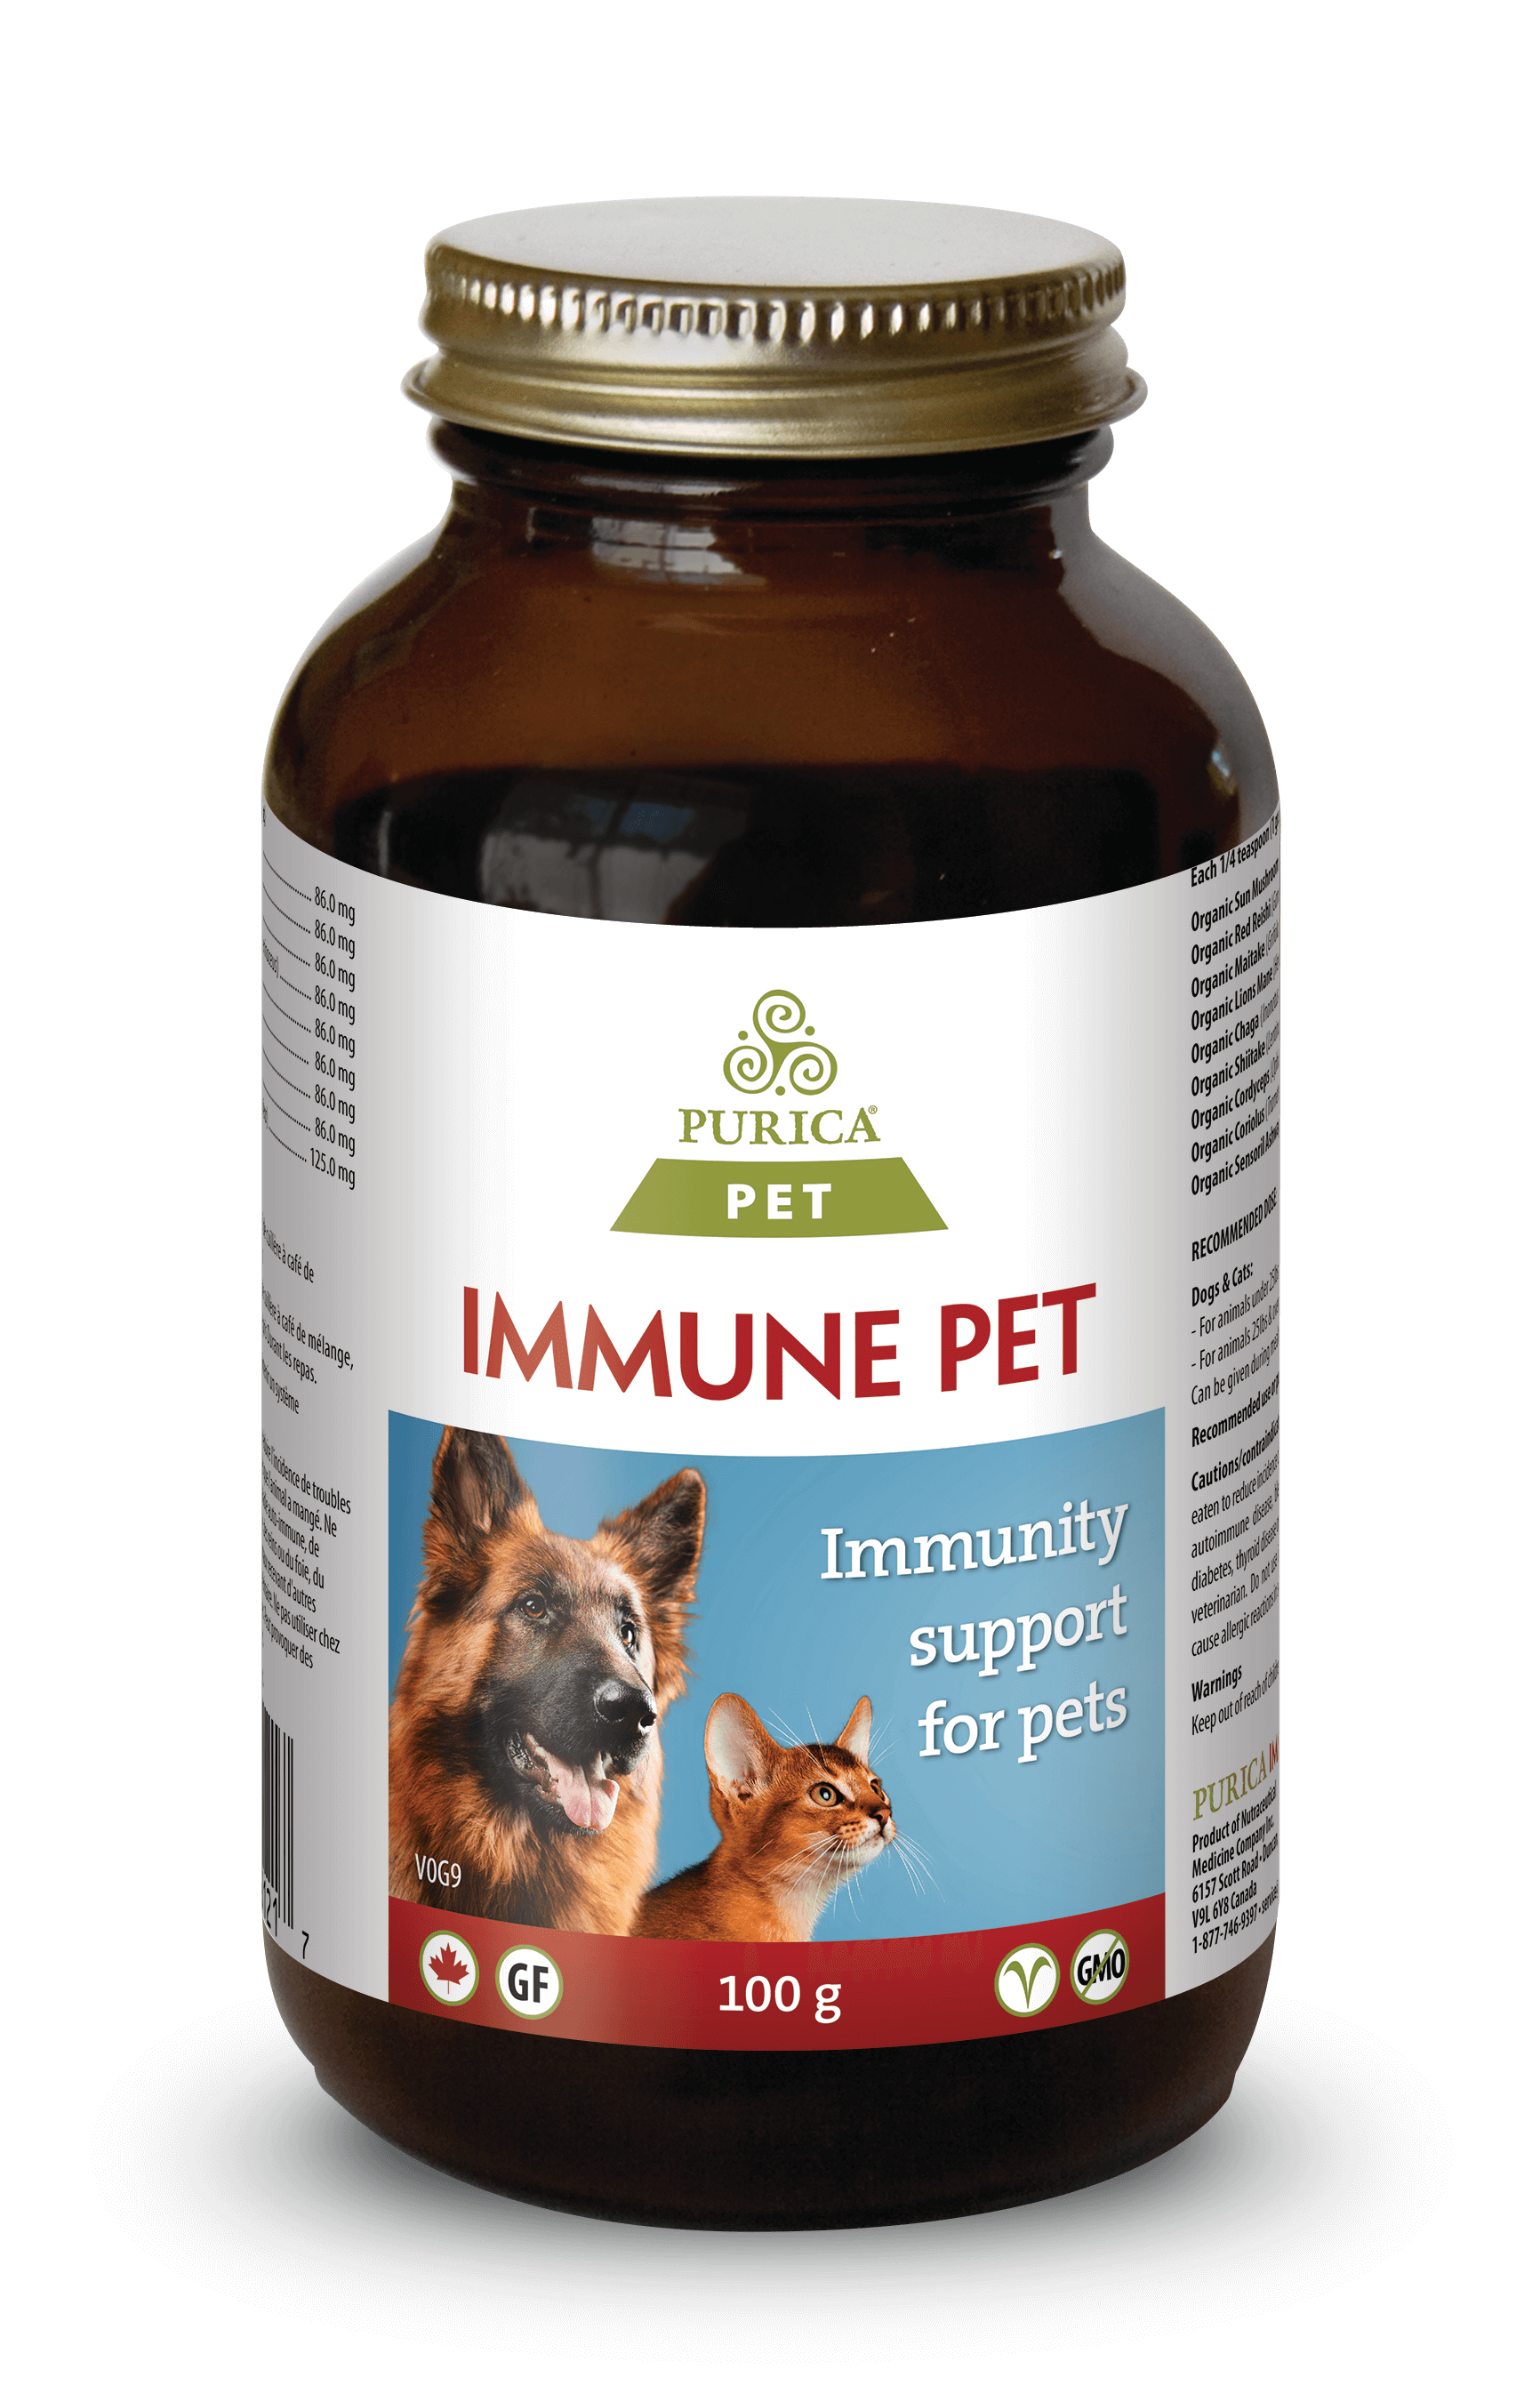 Purica Immune Pet (100g) - Lifestyle Markets